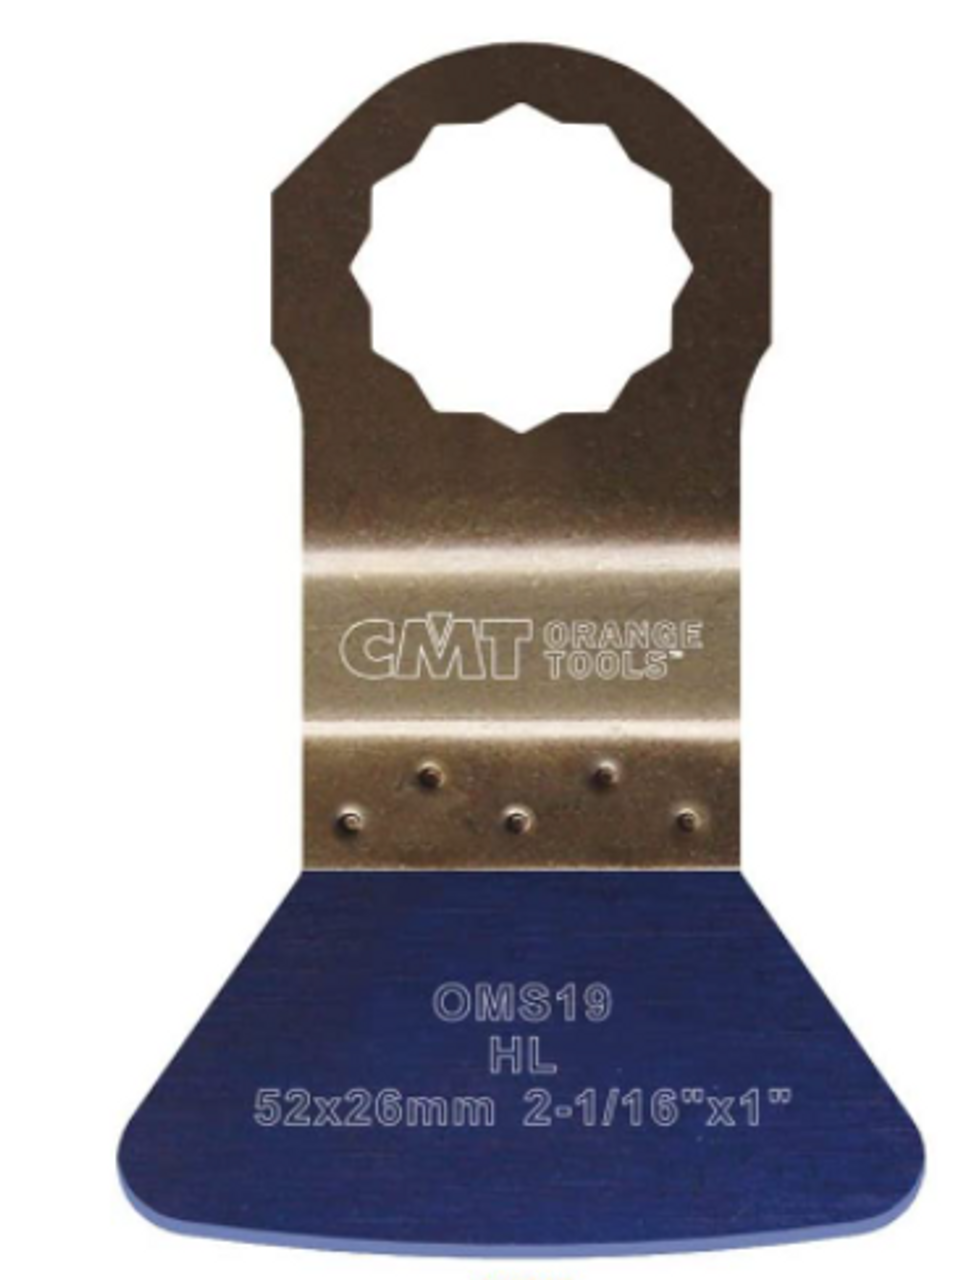 CMT OMS19-X5,52mm Rigid Scraper for all materials,5 Piece Pack